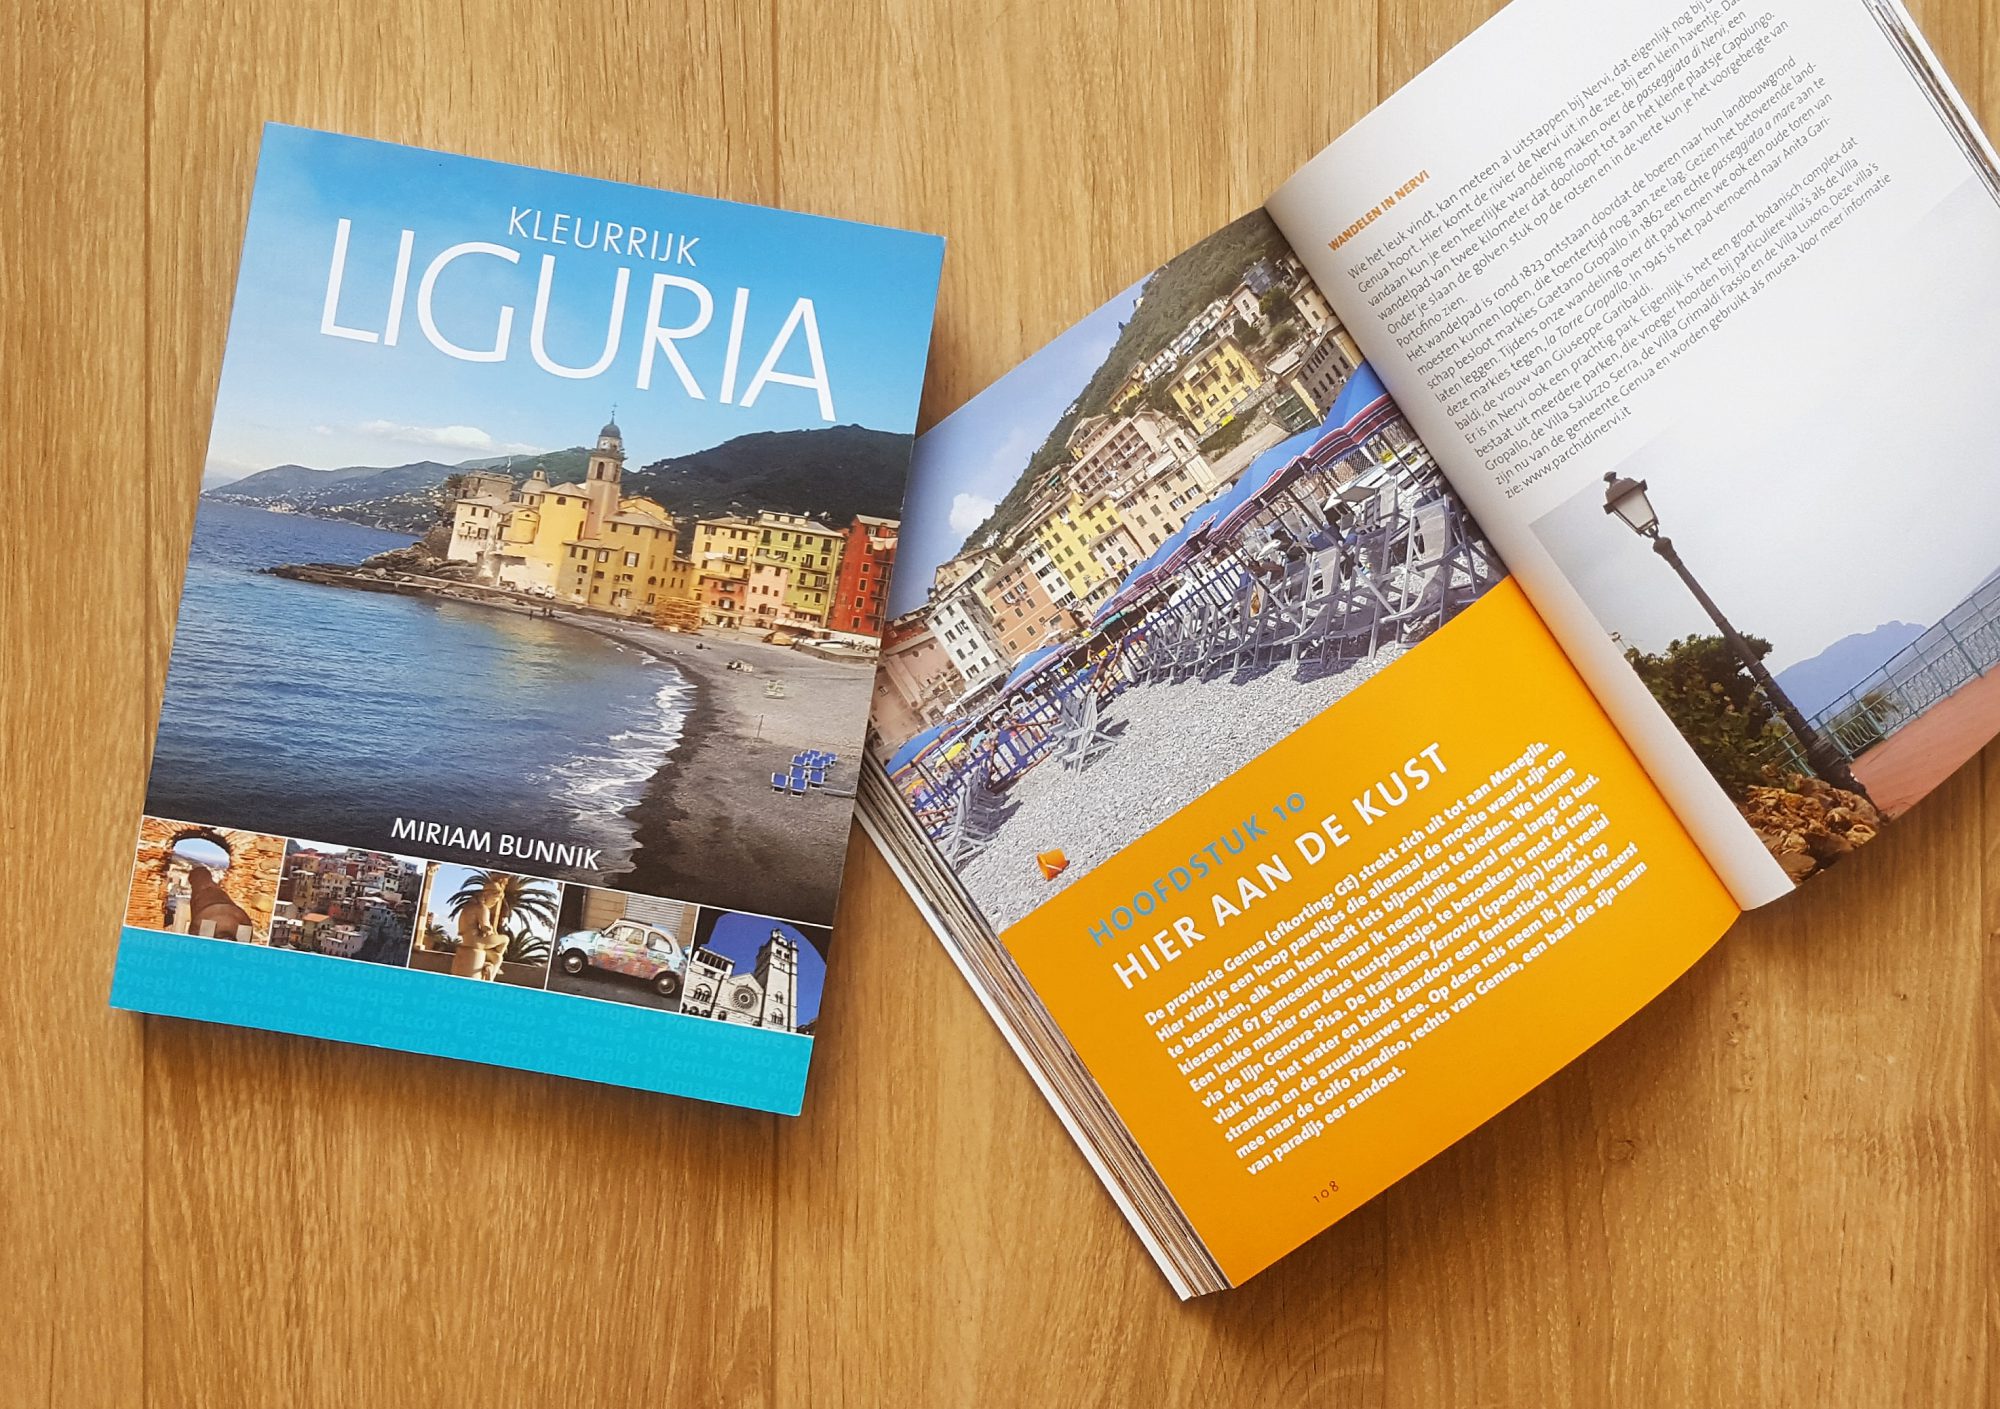 Kleurrijk Liguria